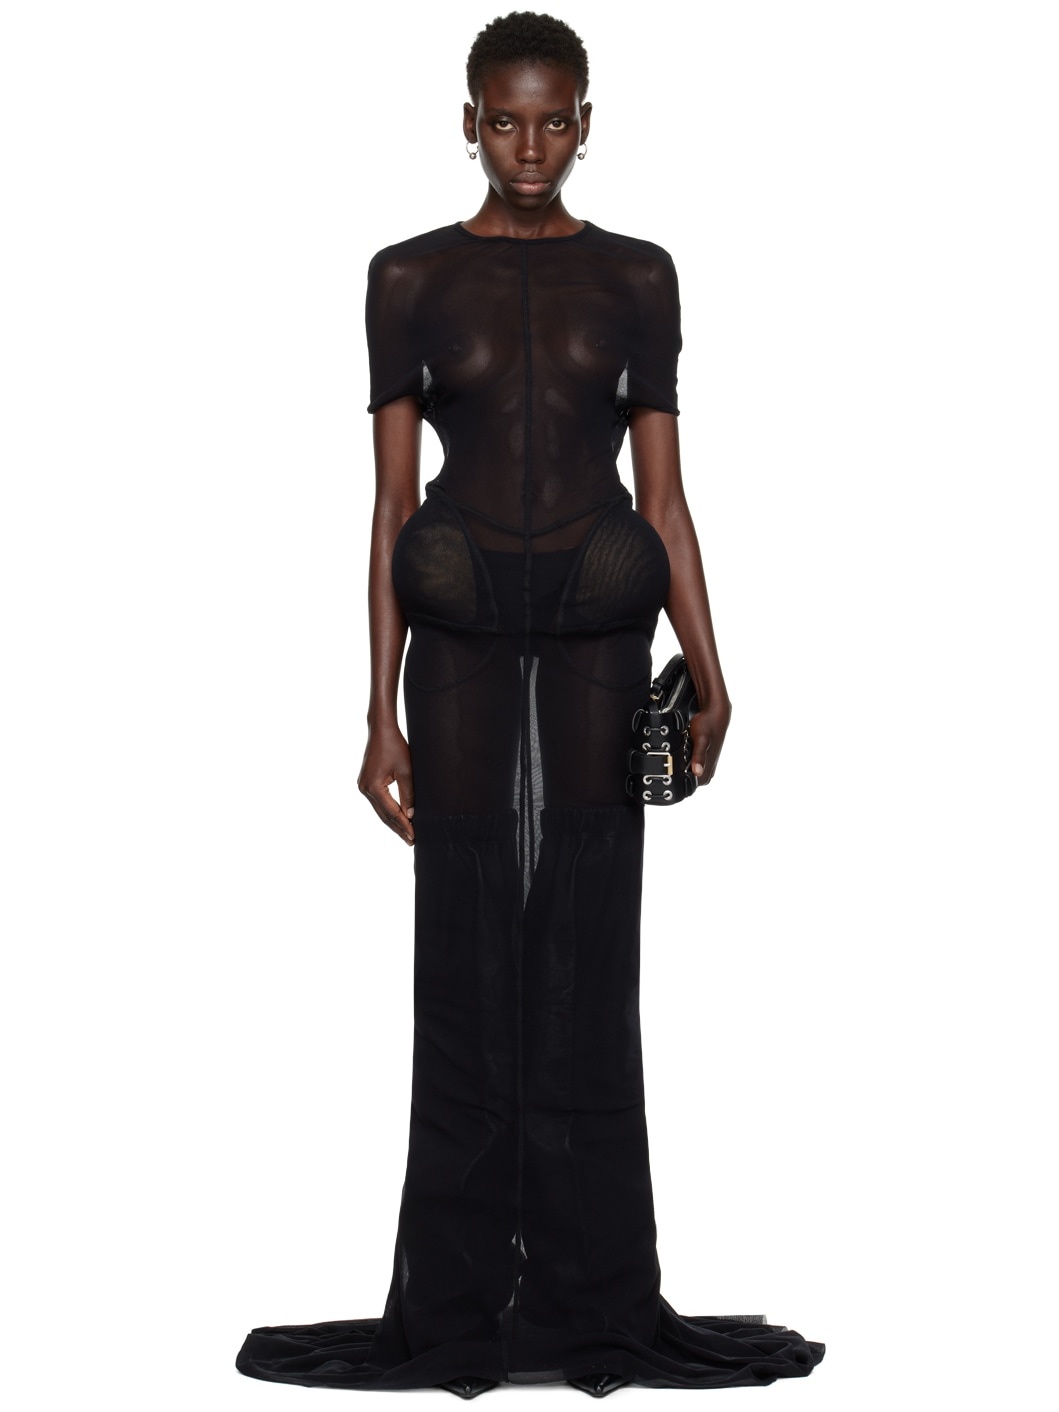 Black Shayne Oliver Edition Maxi Dress - 1